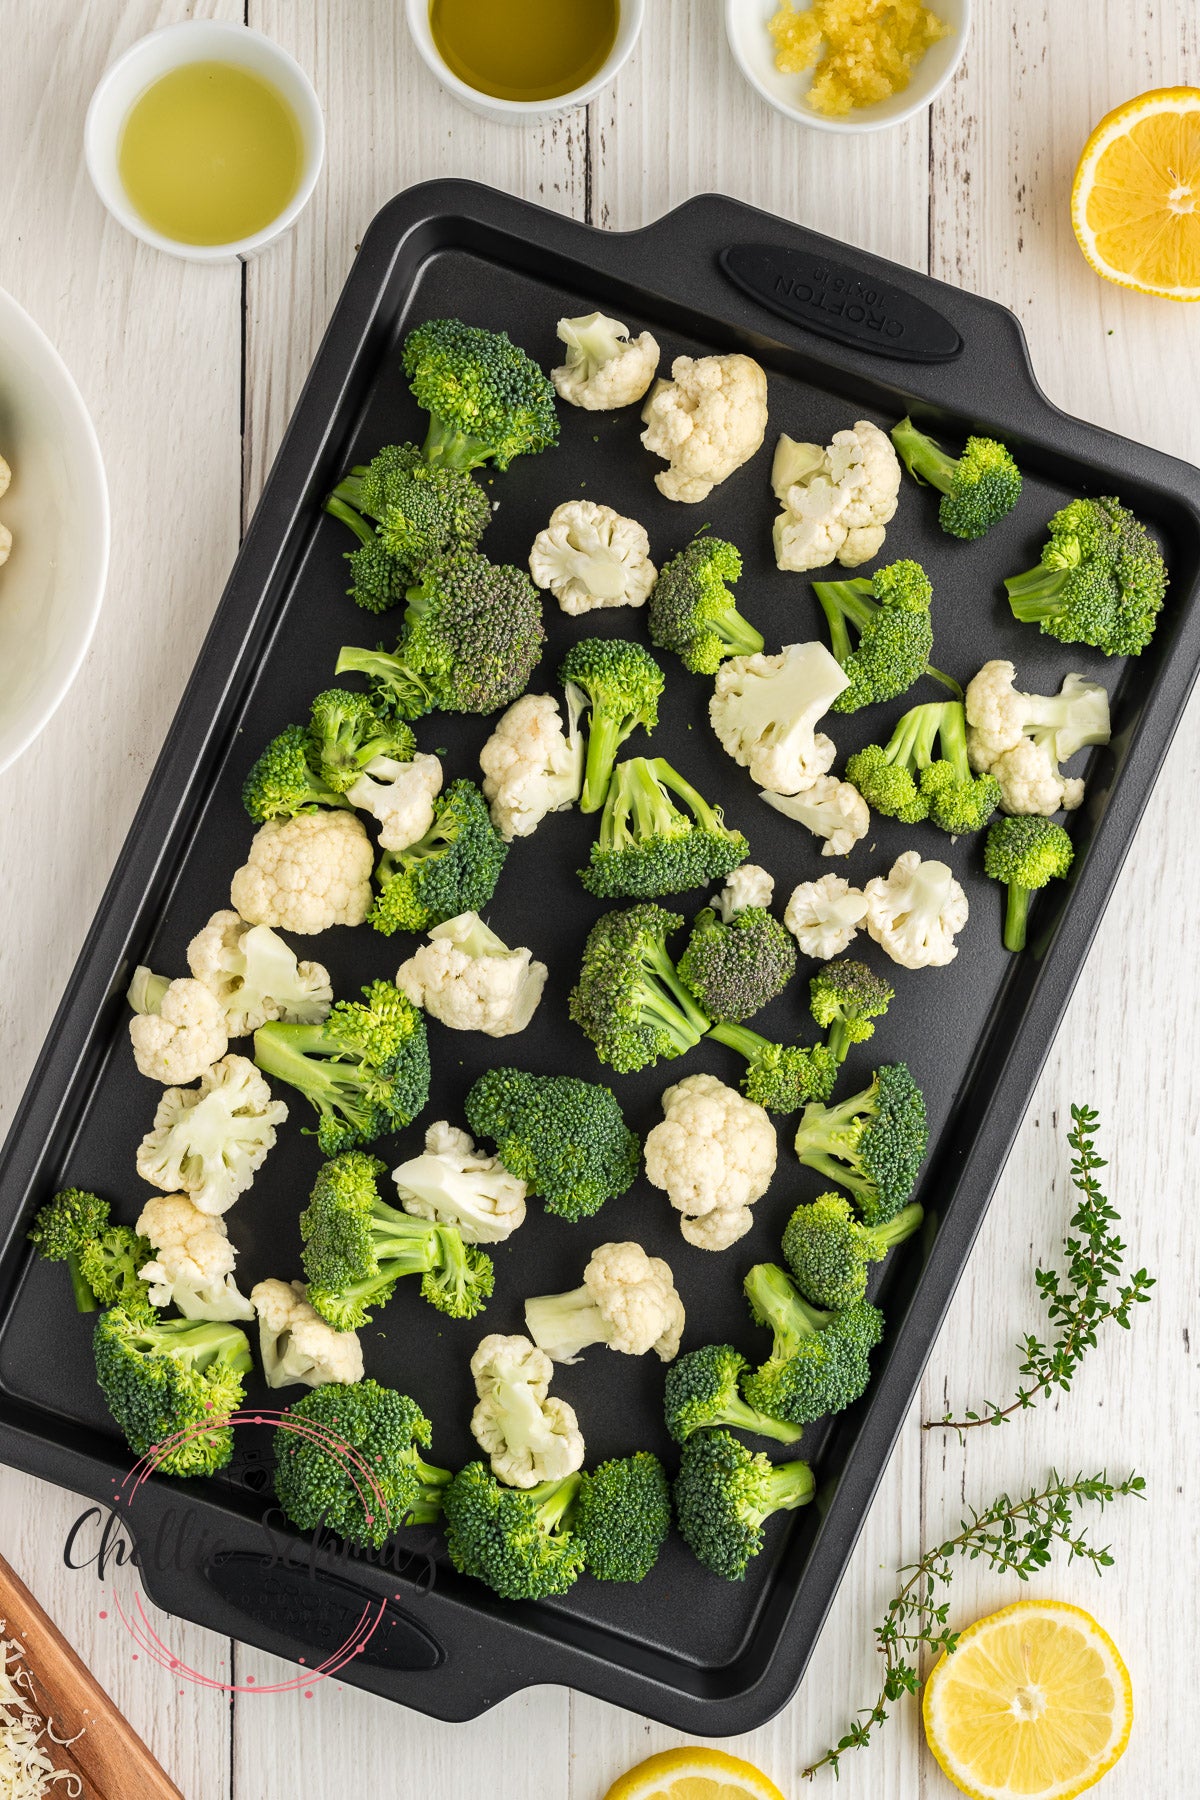 Roasted Broccoli and Cauliflower